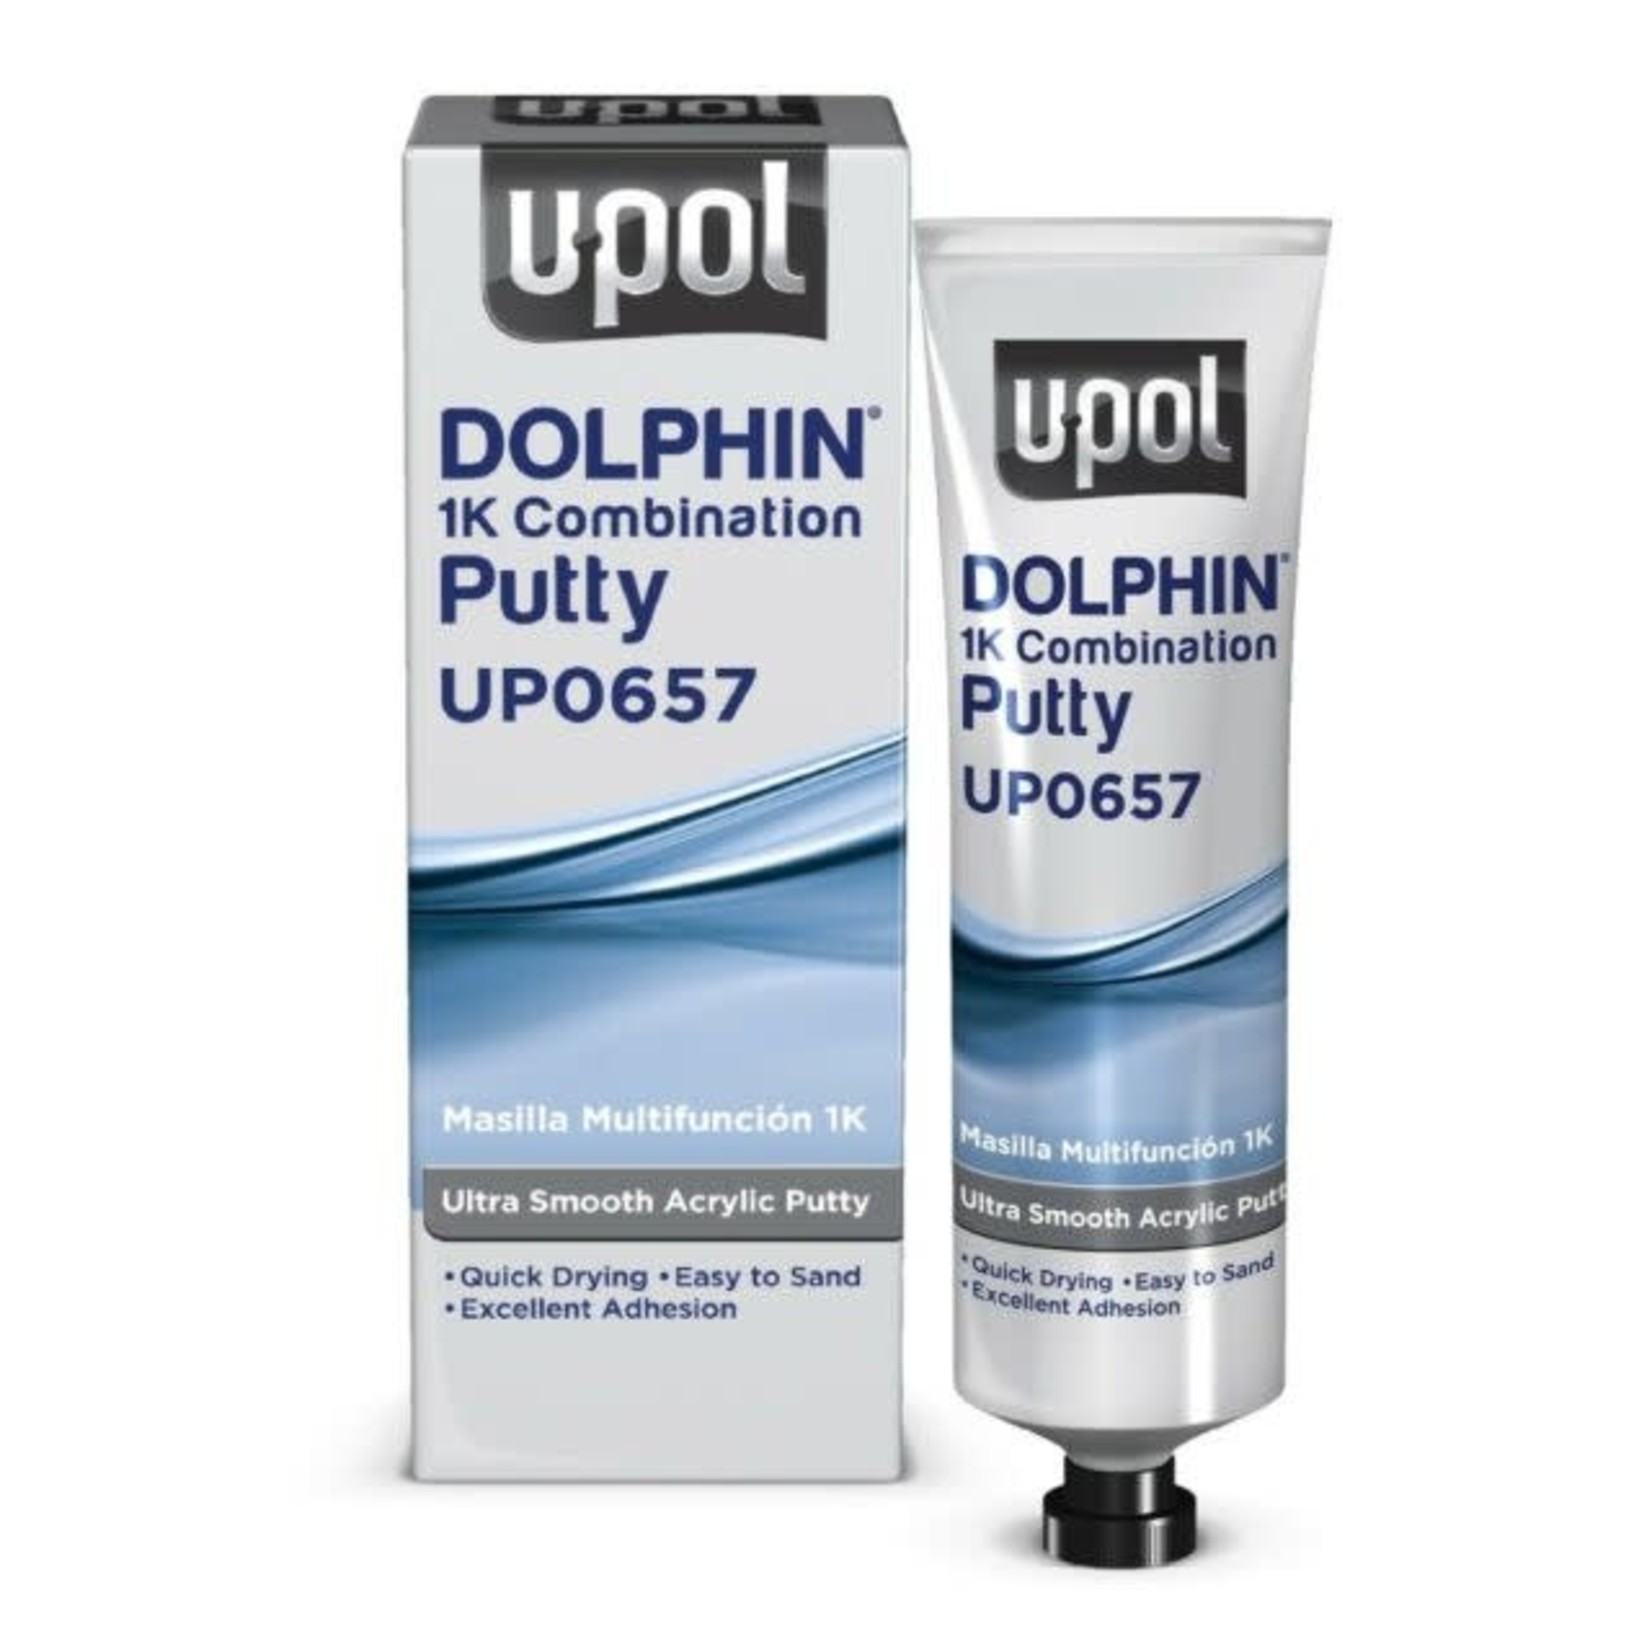 U-POL UPOL Dolphin 1K Combination Putty 200g